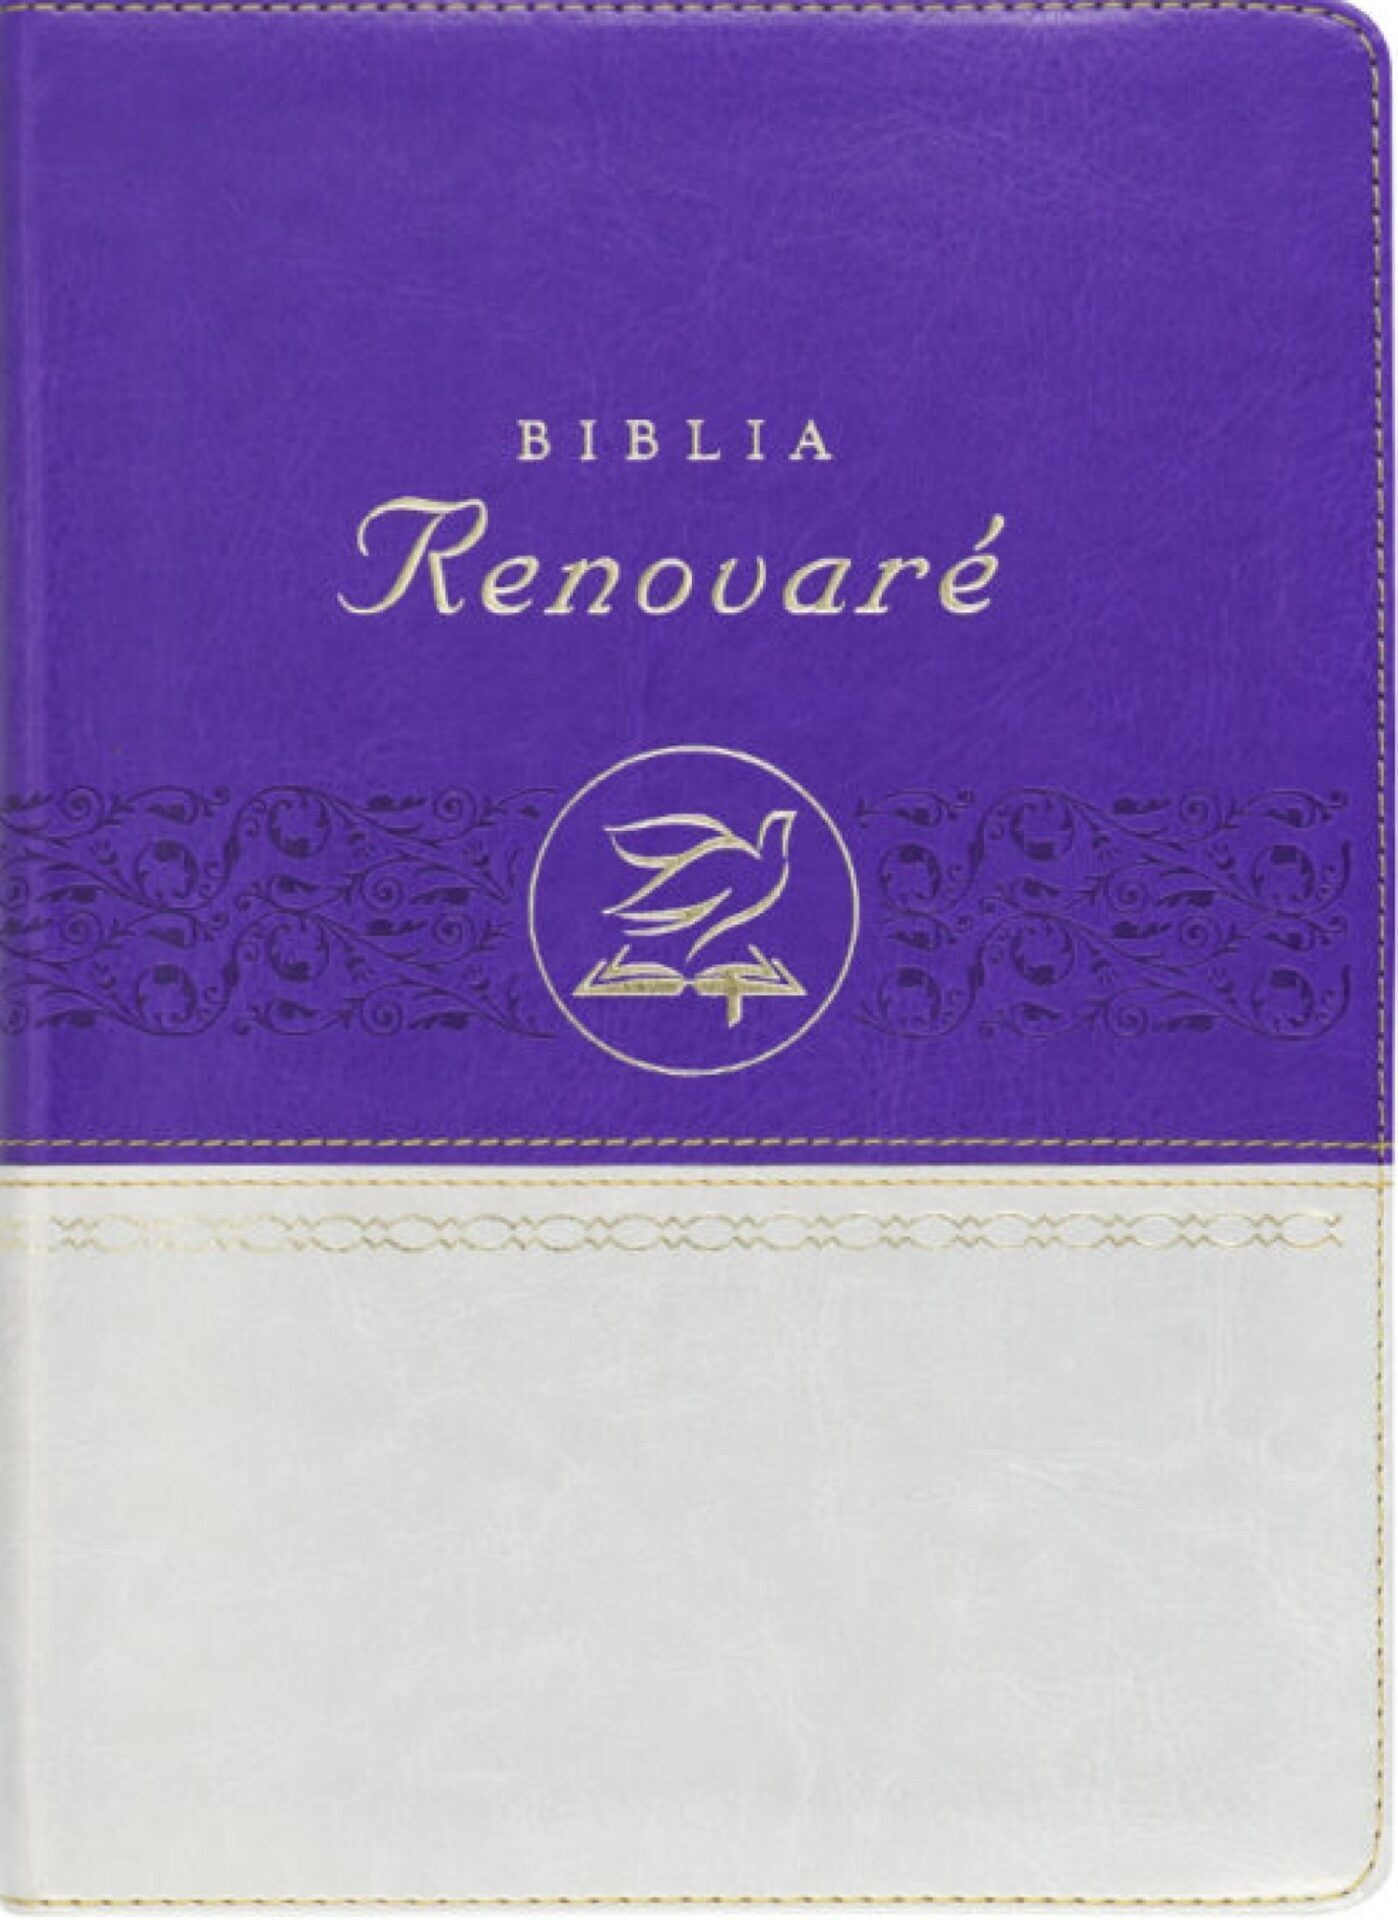 Biblia RV1960 Renovare violeta/beige